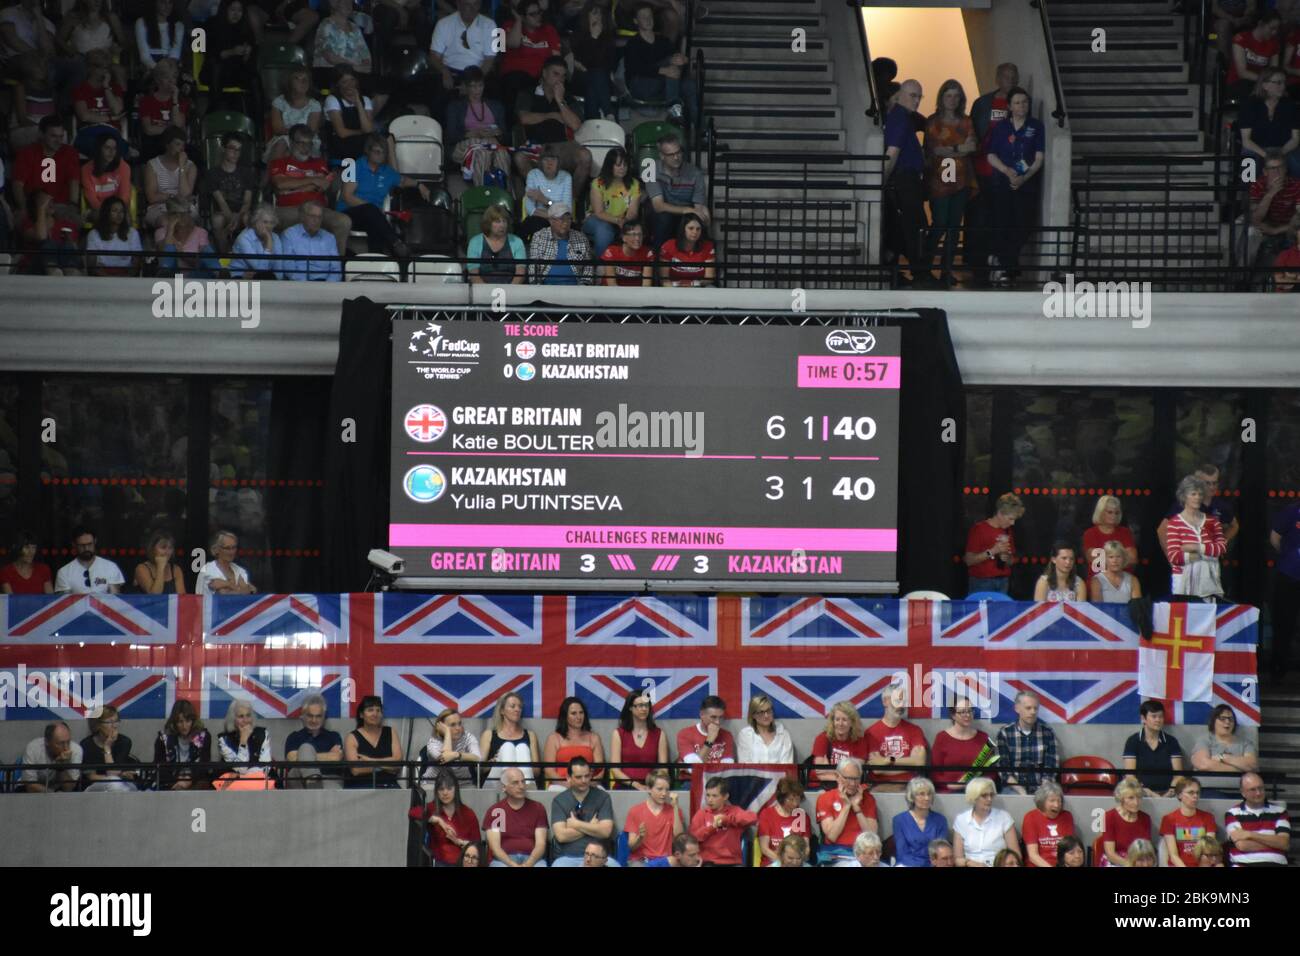 47 HQ Pictures Live Tennis Scores Scoreboard : Tennis Ticker Scoreboard